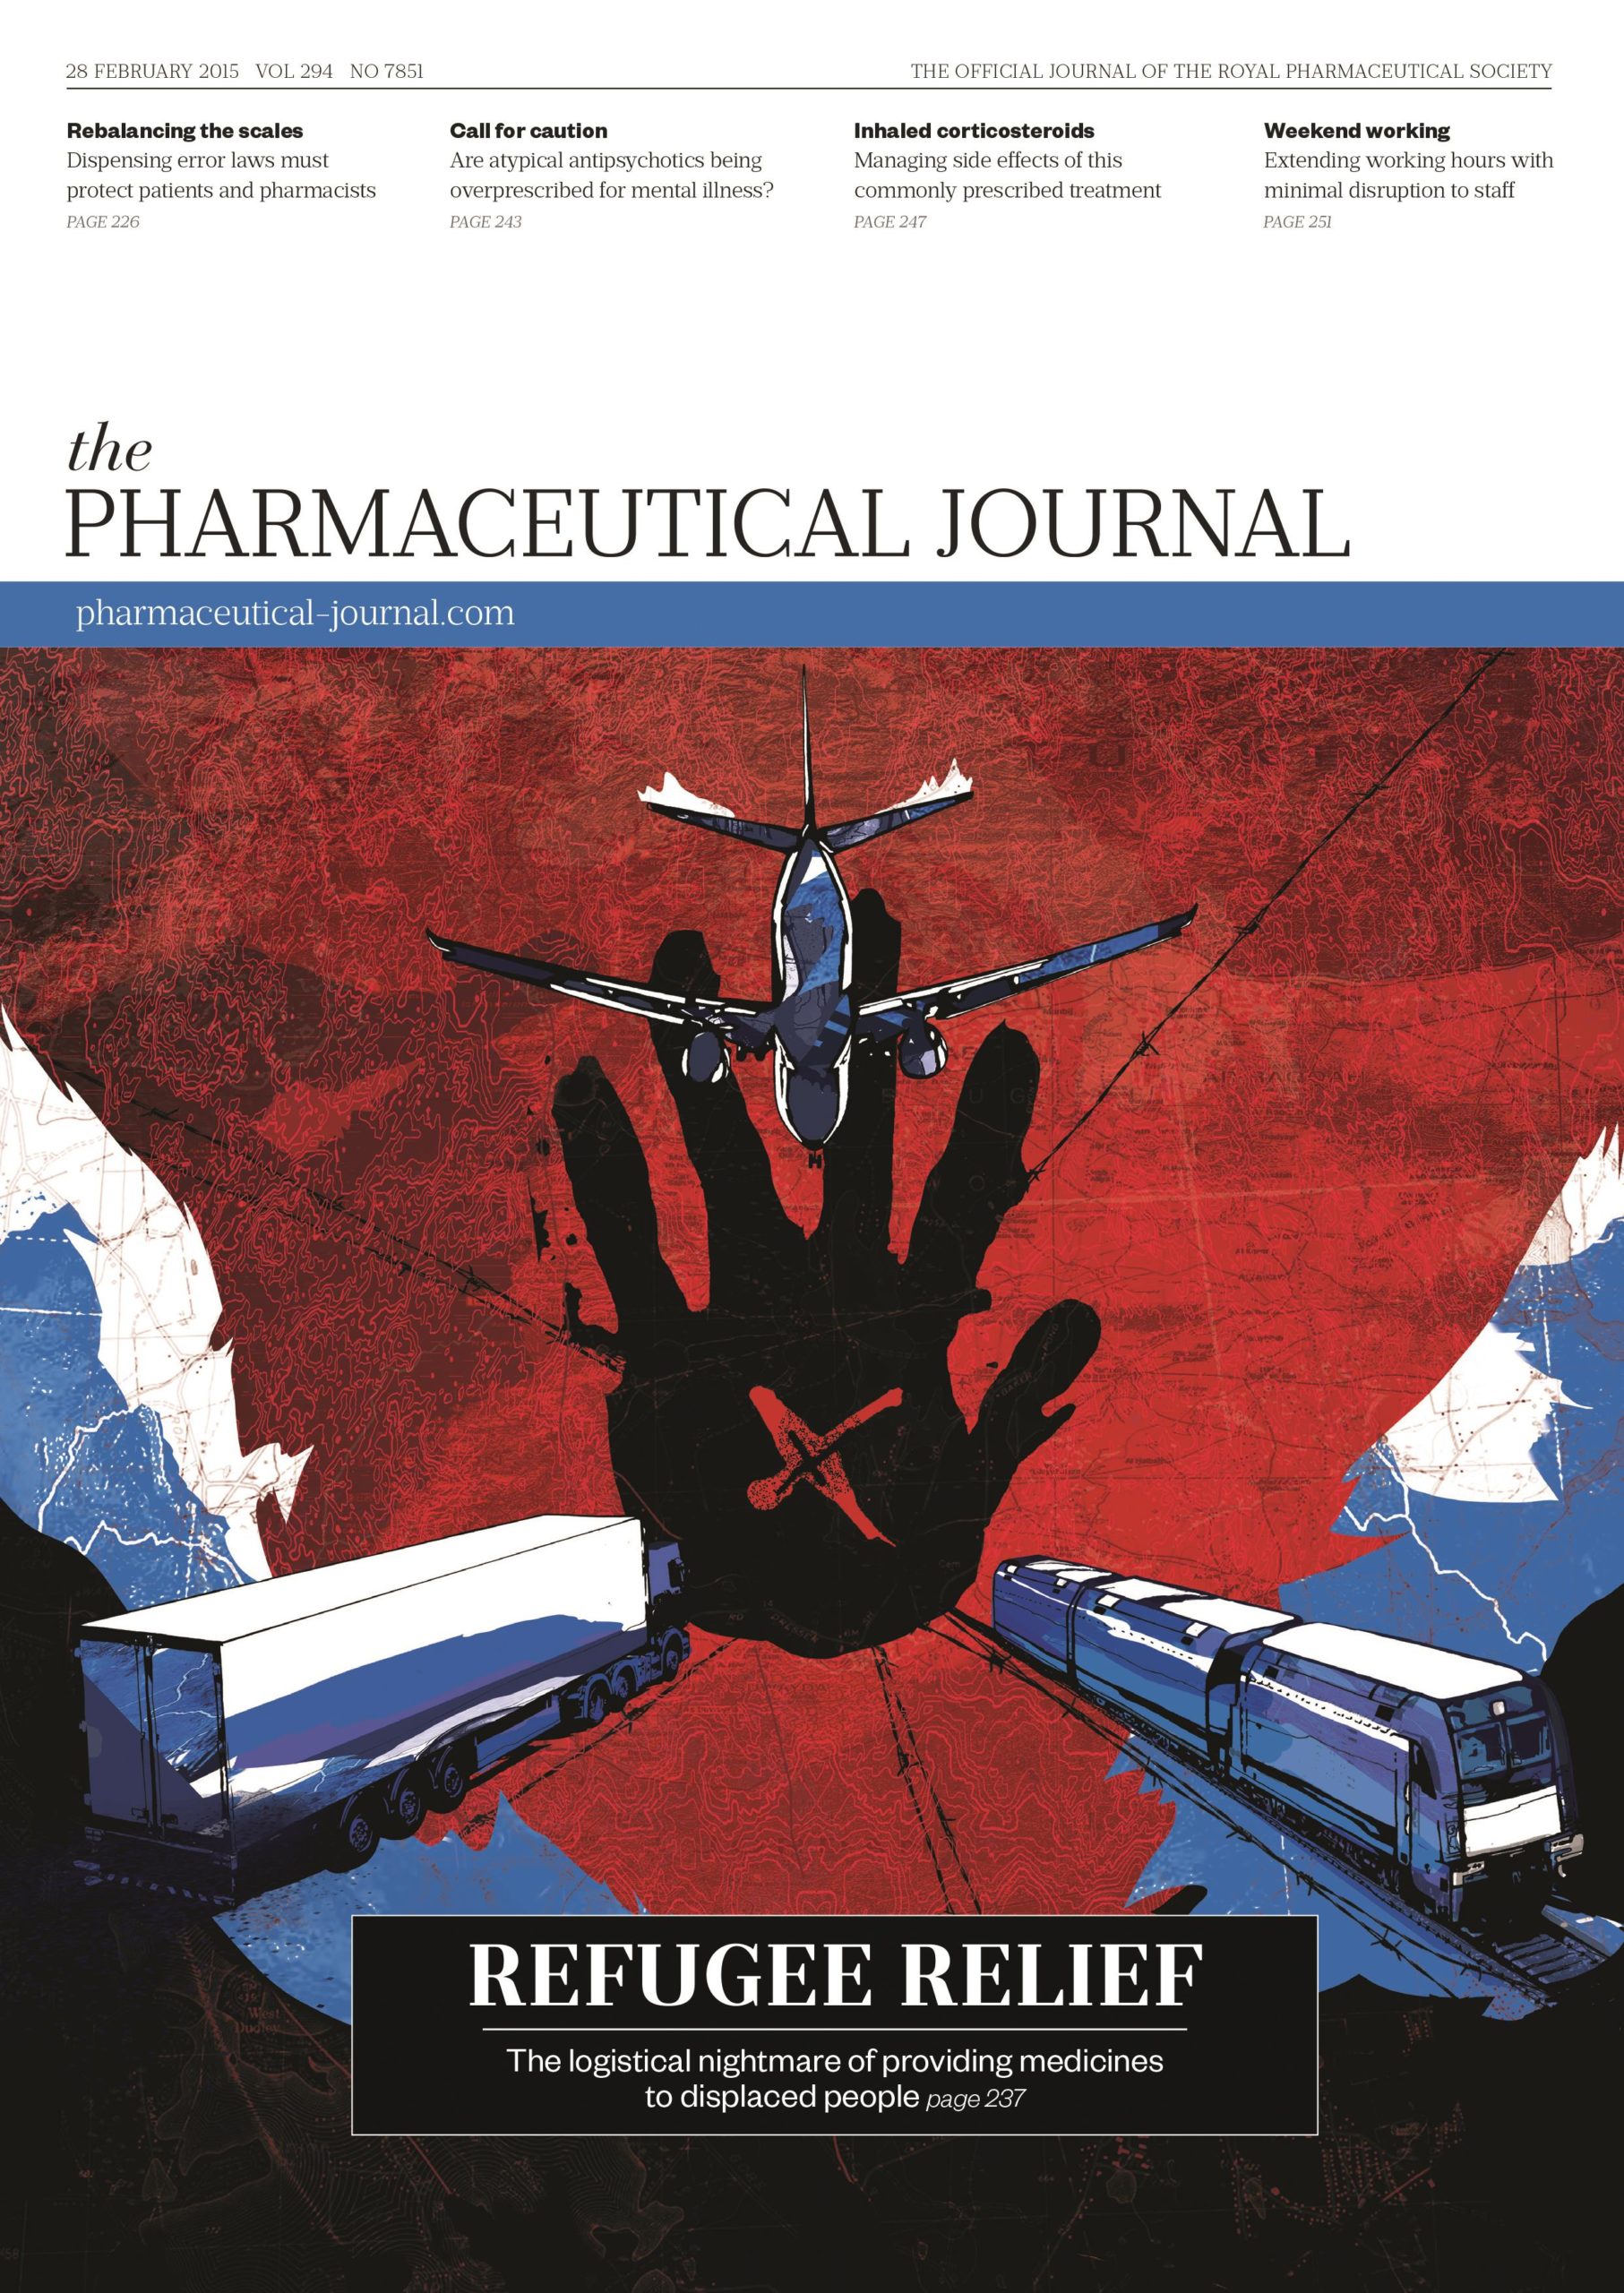 Publication issue cover for PJ, 28 February 2015, Vol 294, No 7851